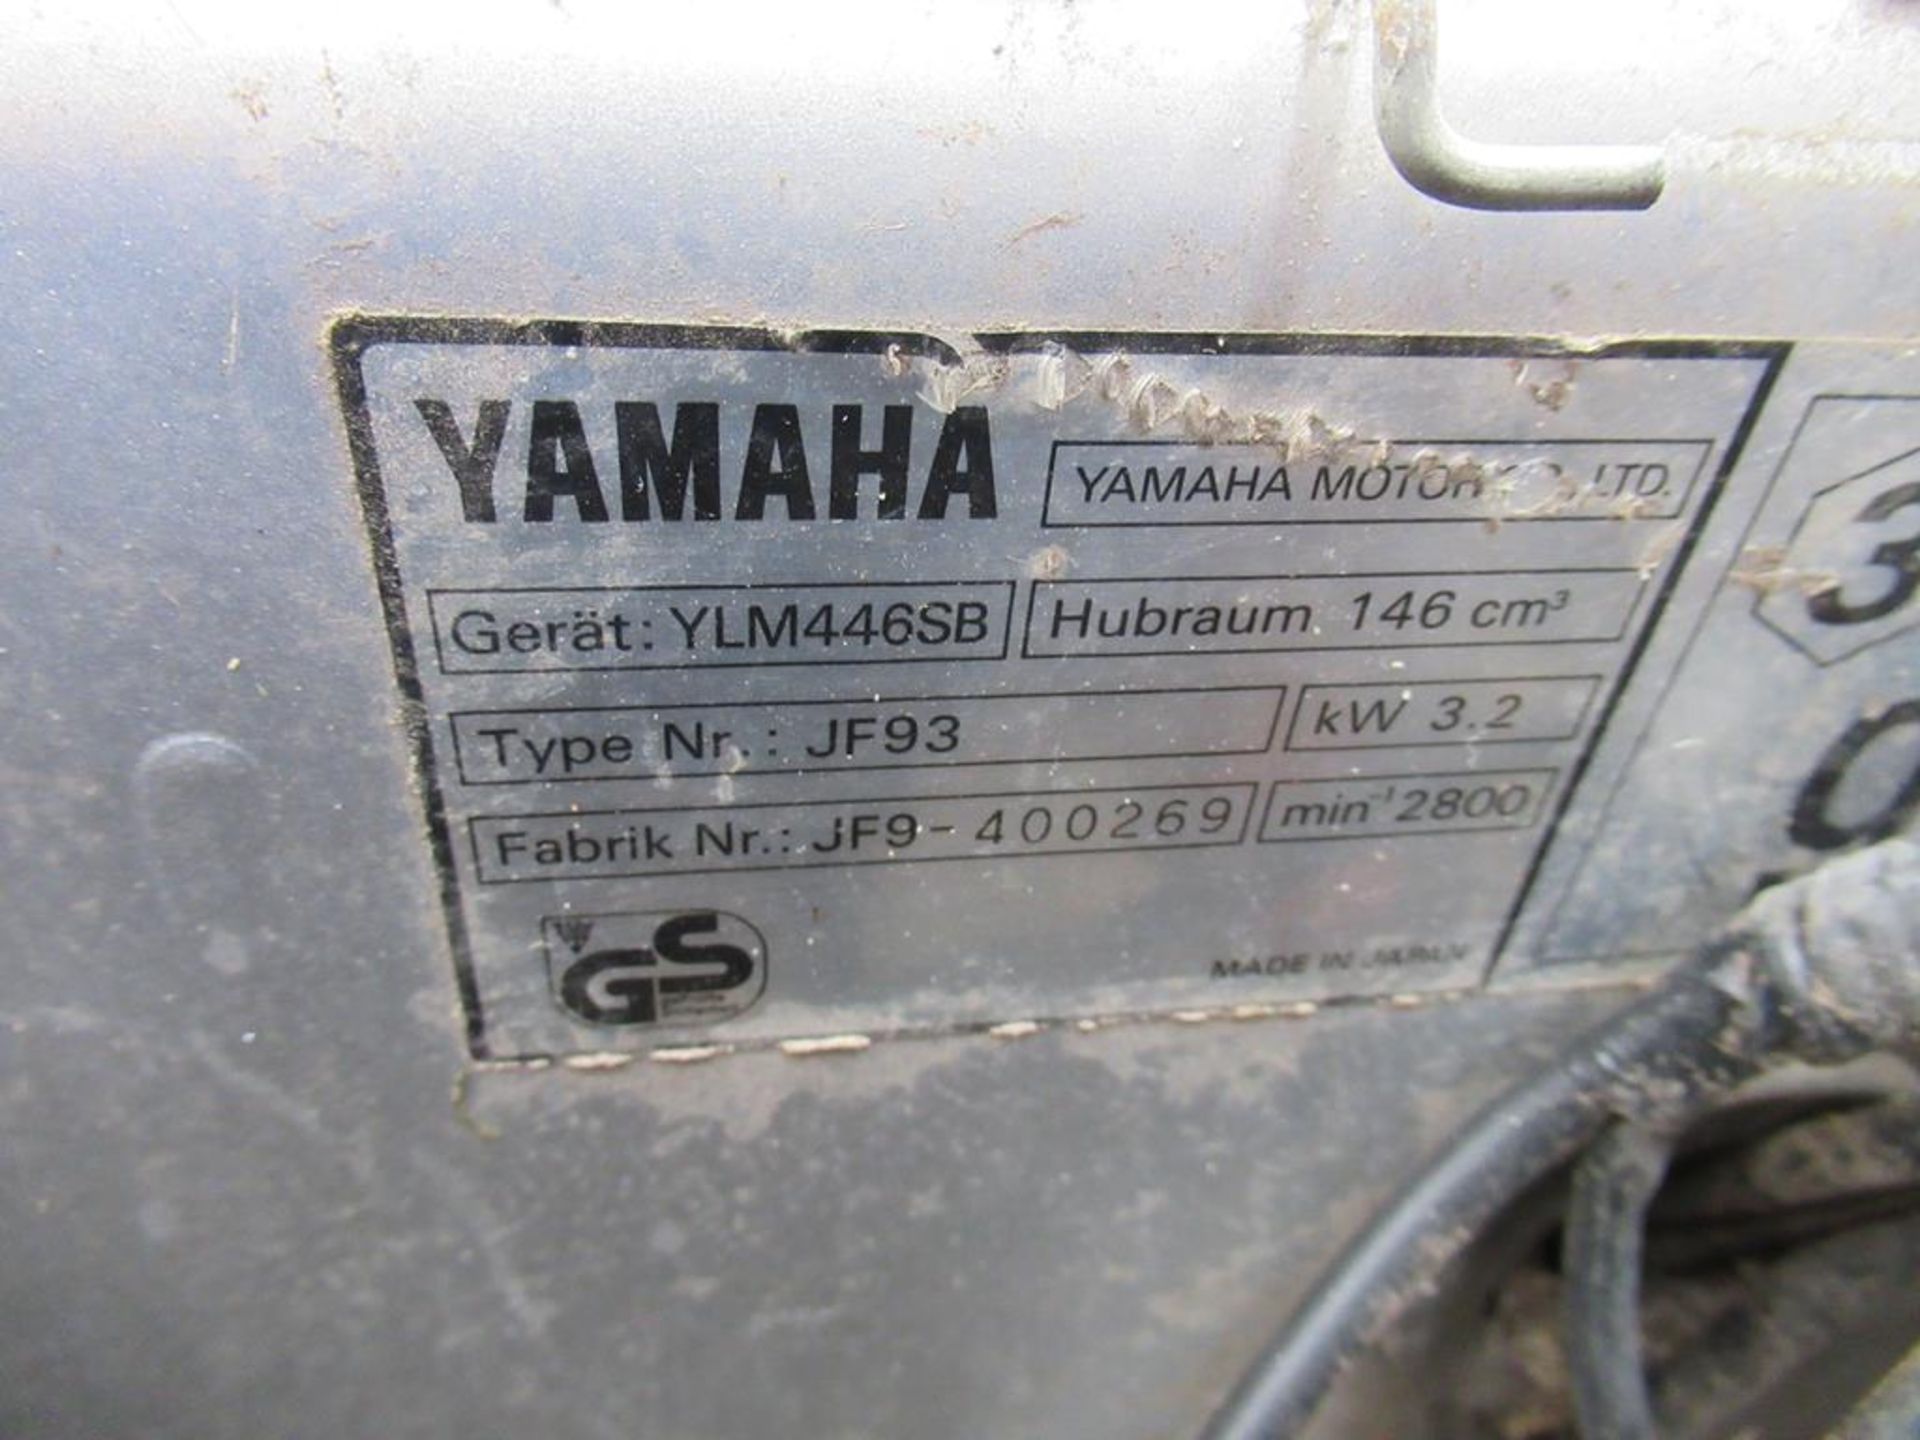 Yamaha YLM446 Petrol Powered Lawn Mower - Image 2 of 2